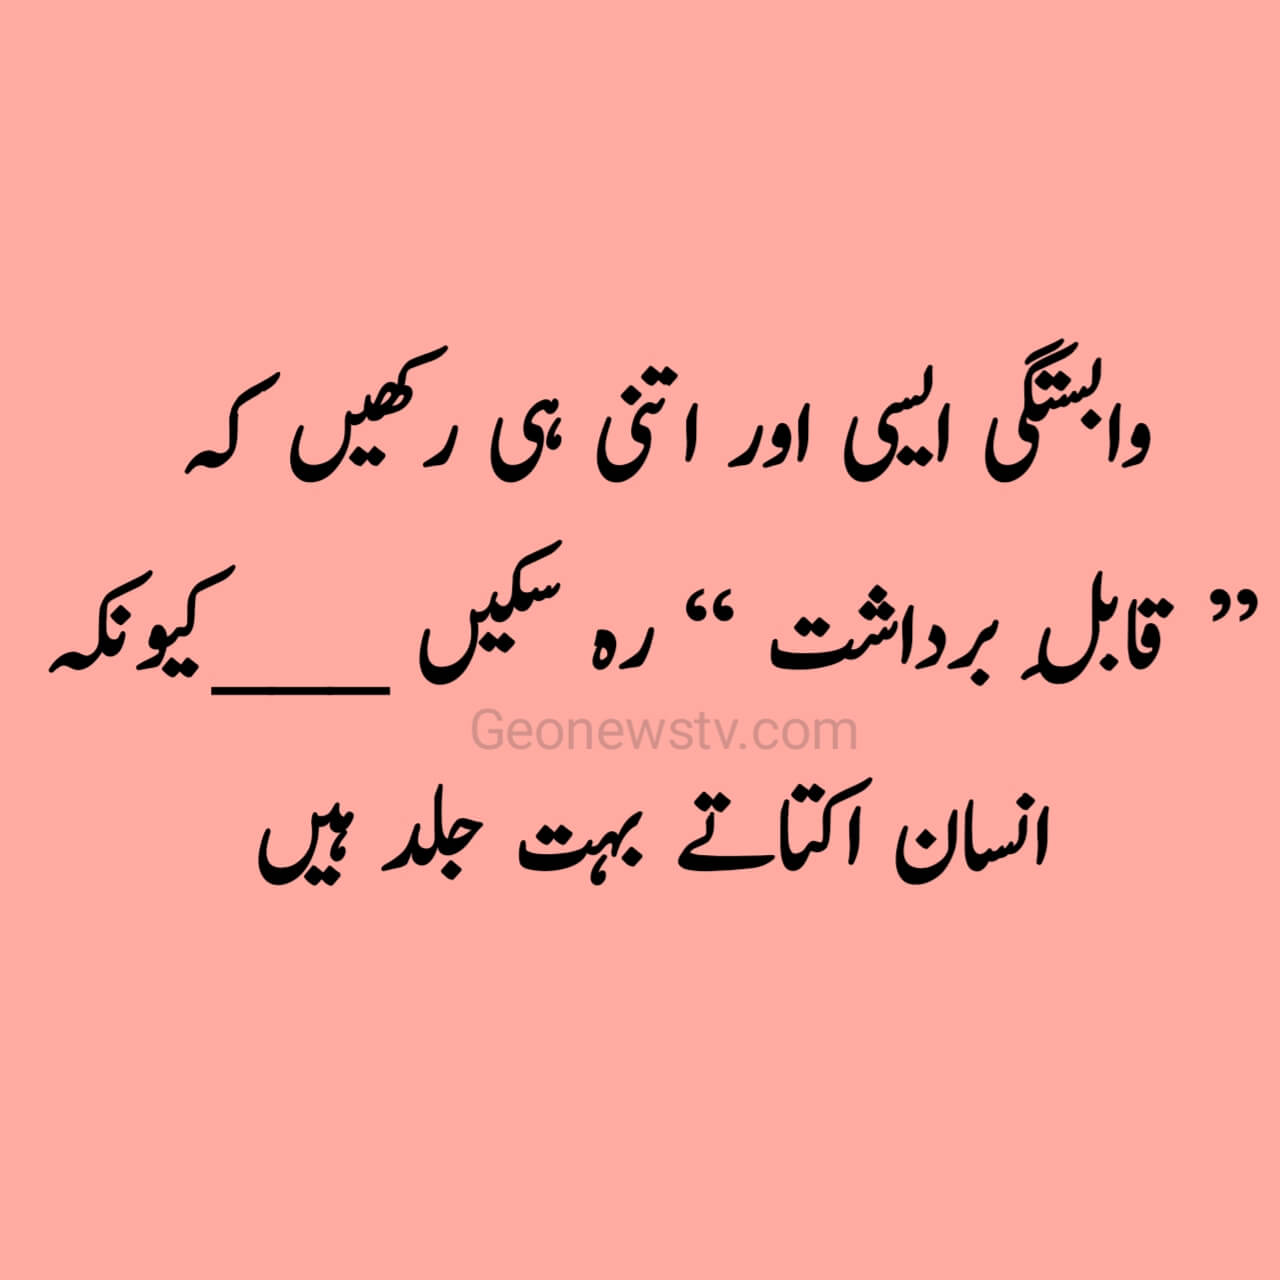 Sad and lonely quotes urdu - Sad broken heart quotes in urdu |